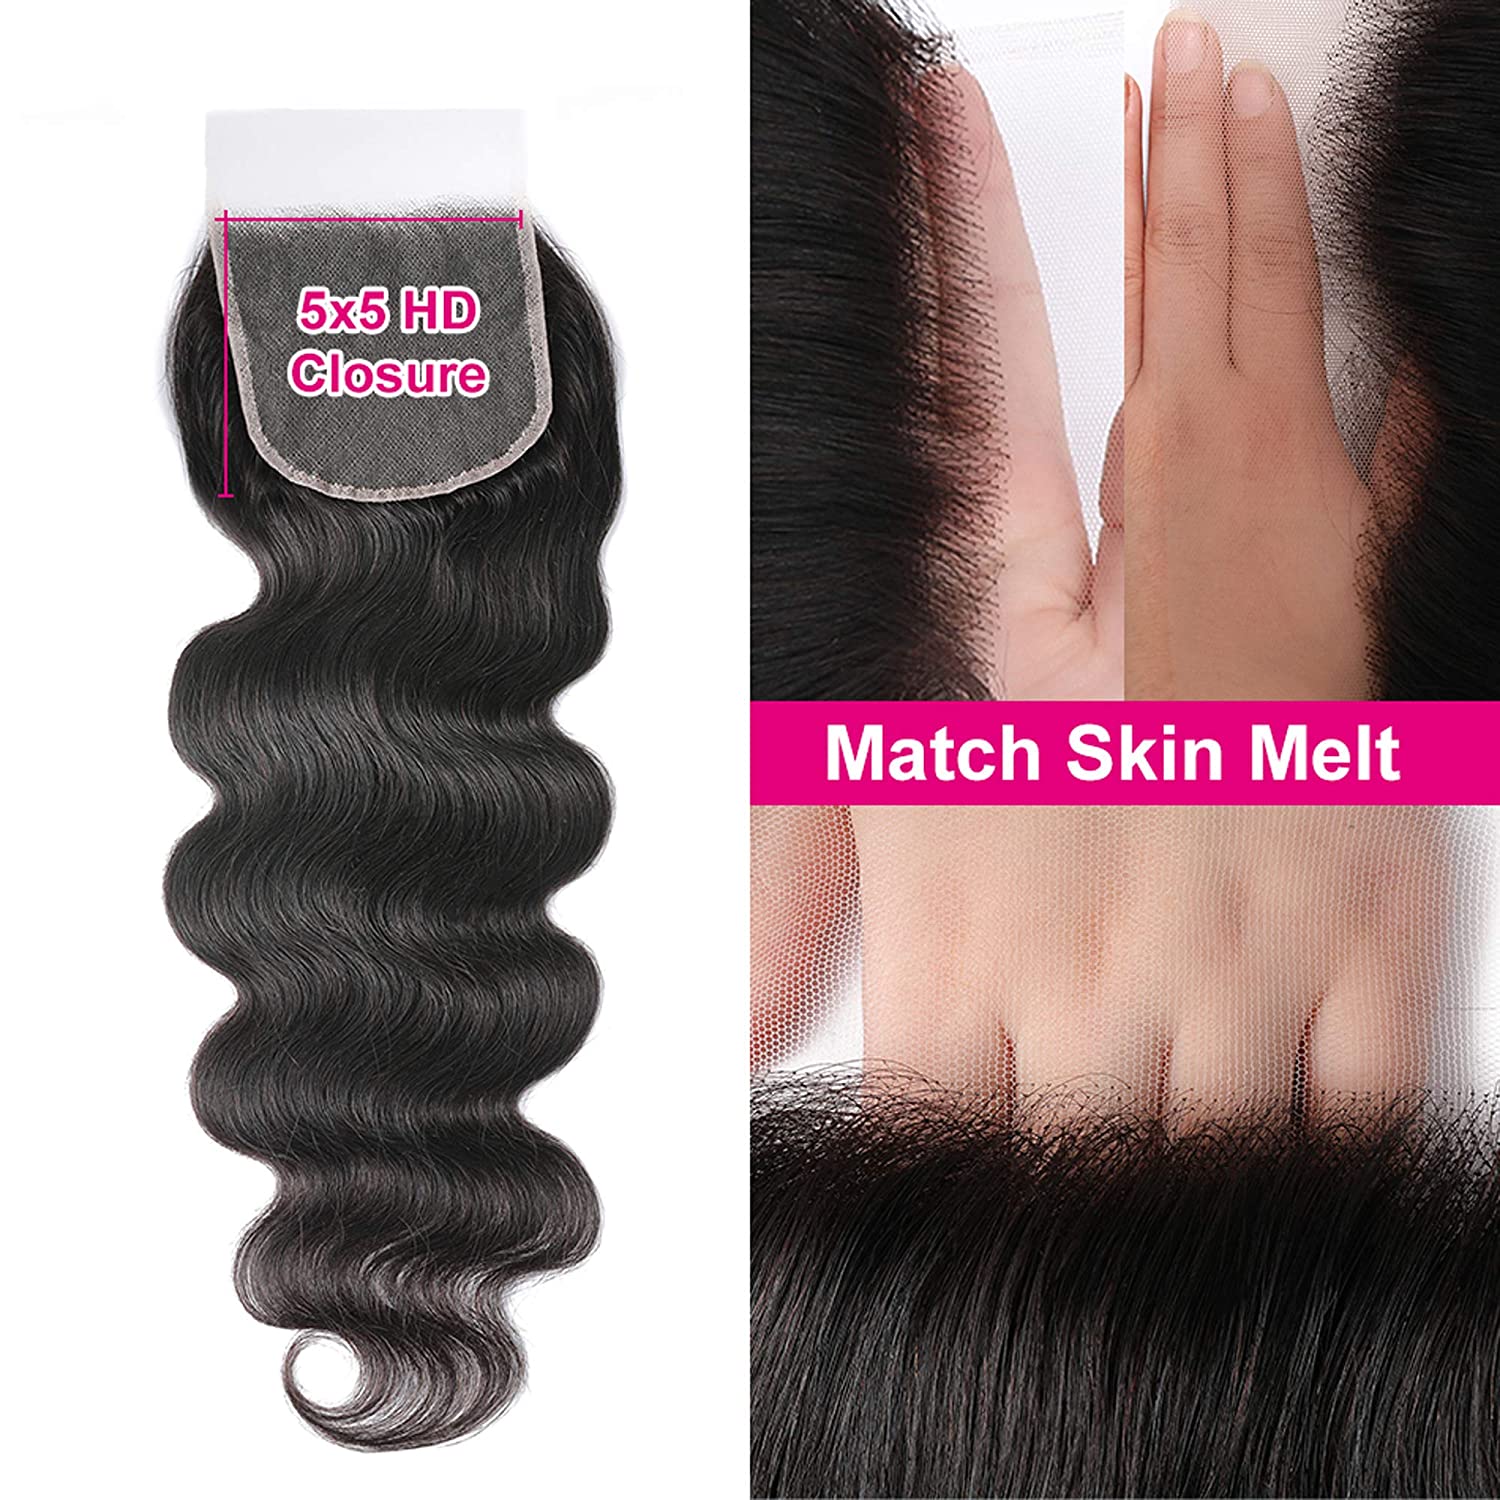 Gluna Invisable 5X5 HD Lace Closure Deep Parting For Women Body Wave Virgin Human Hair Black Color